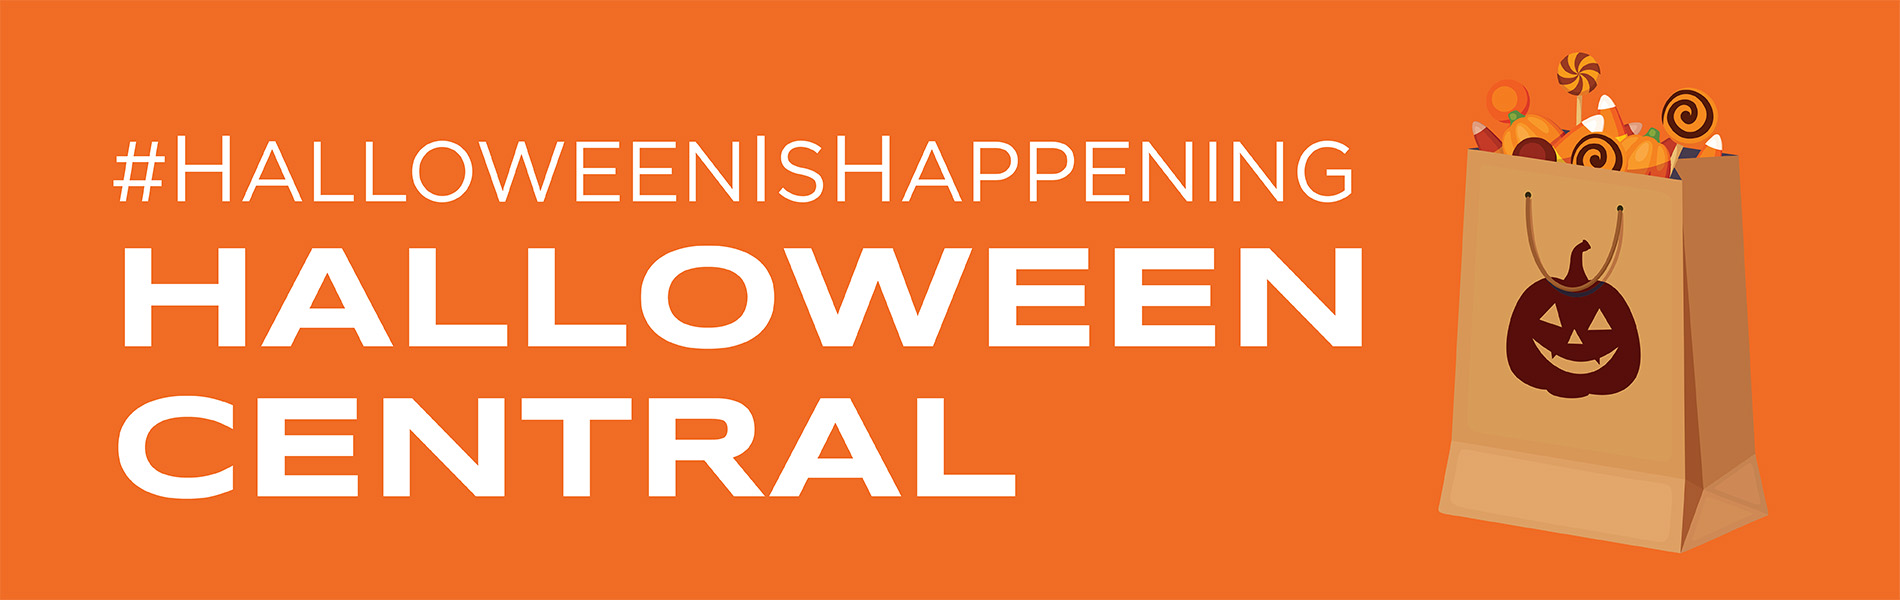 Halloween Central Banner